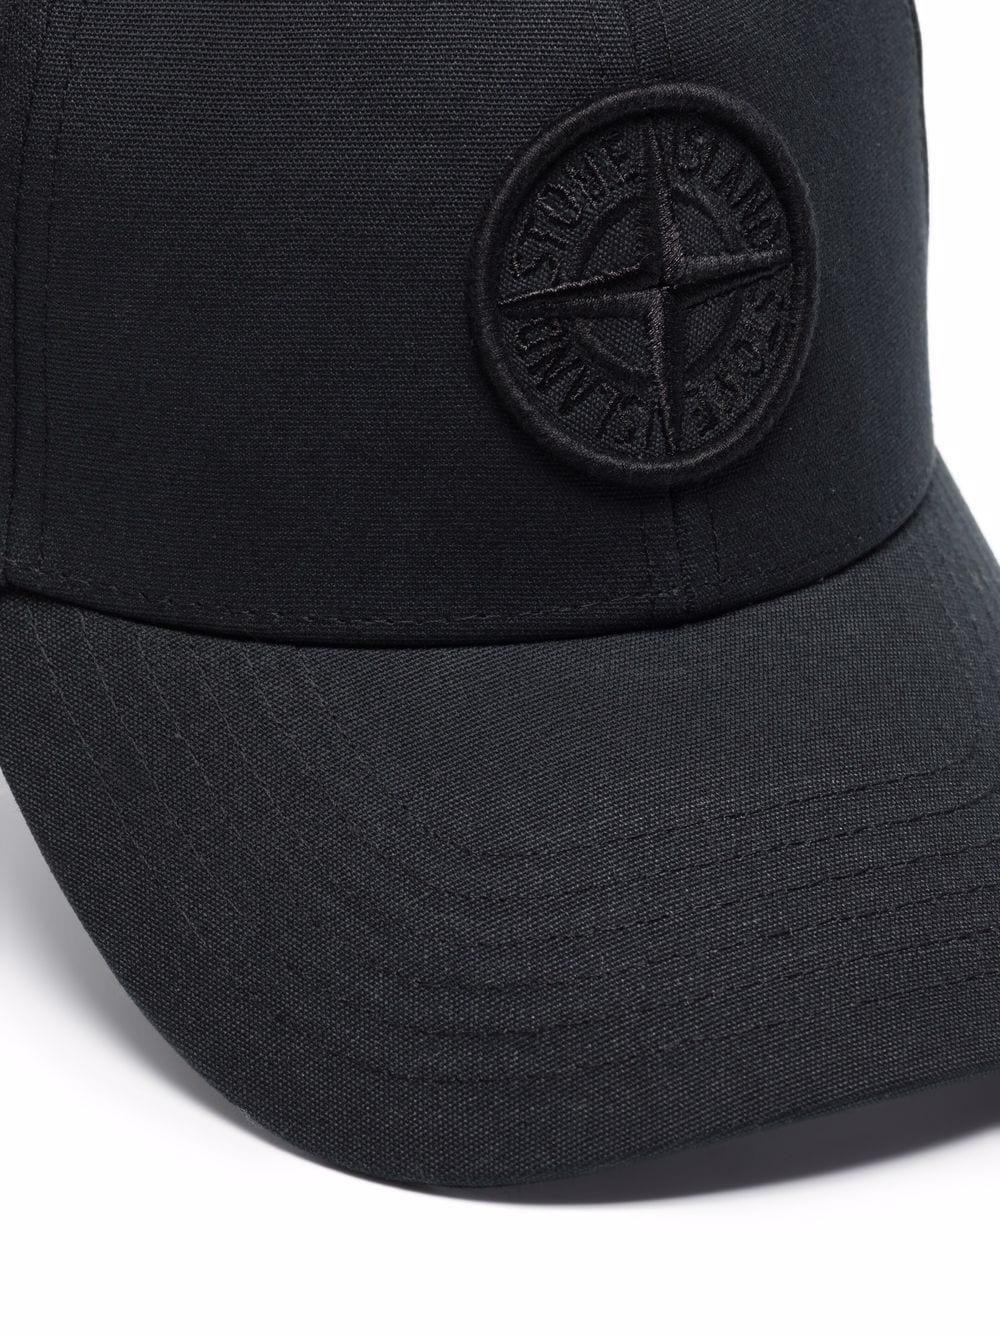 Stone Island Compass Badge Cotton Cap in Black for Men | Lyst